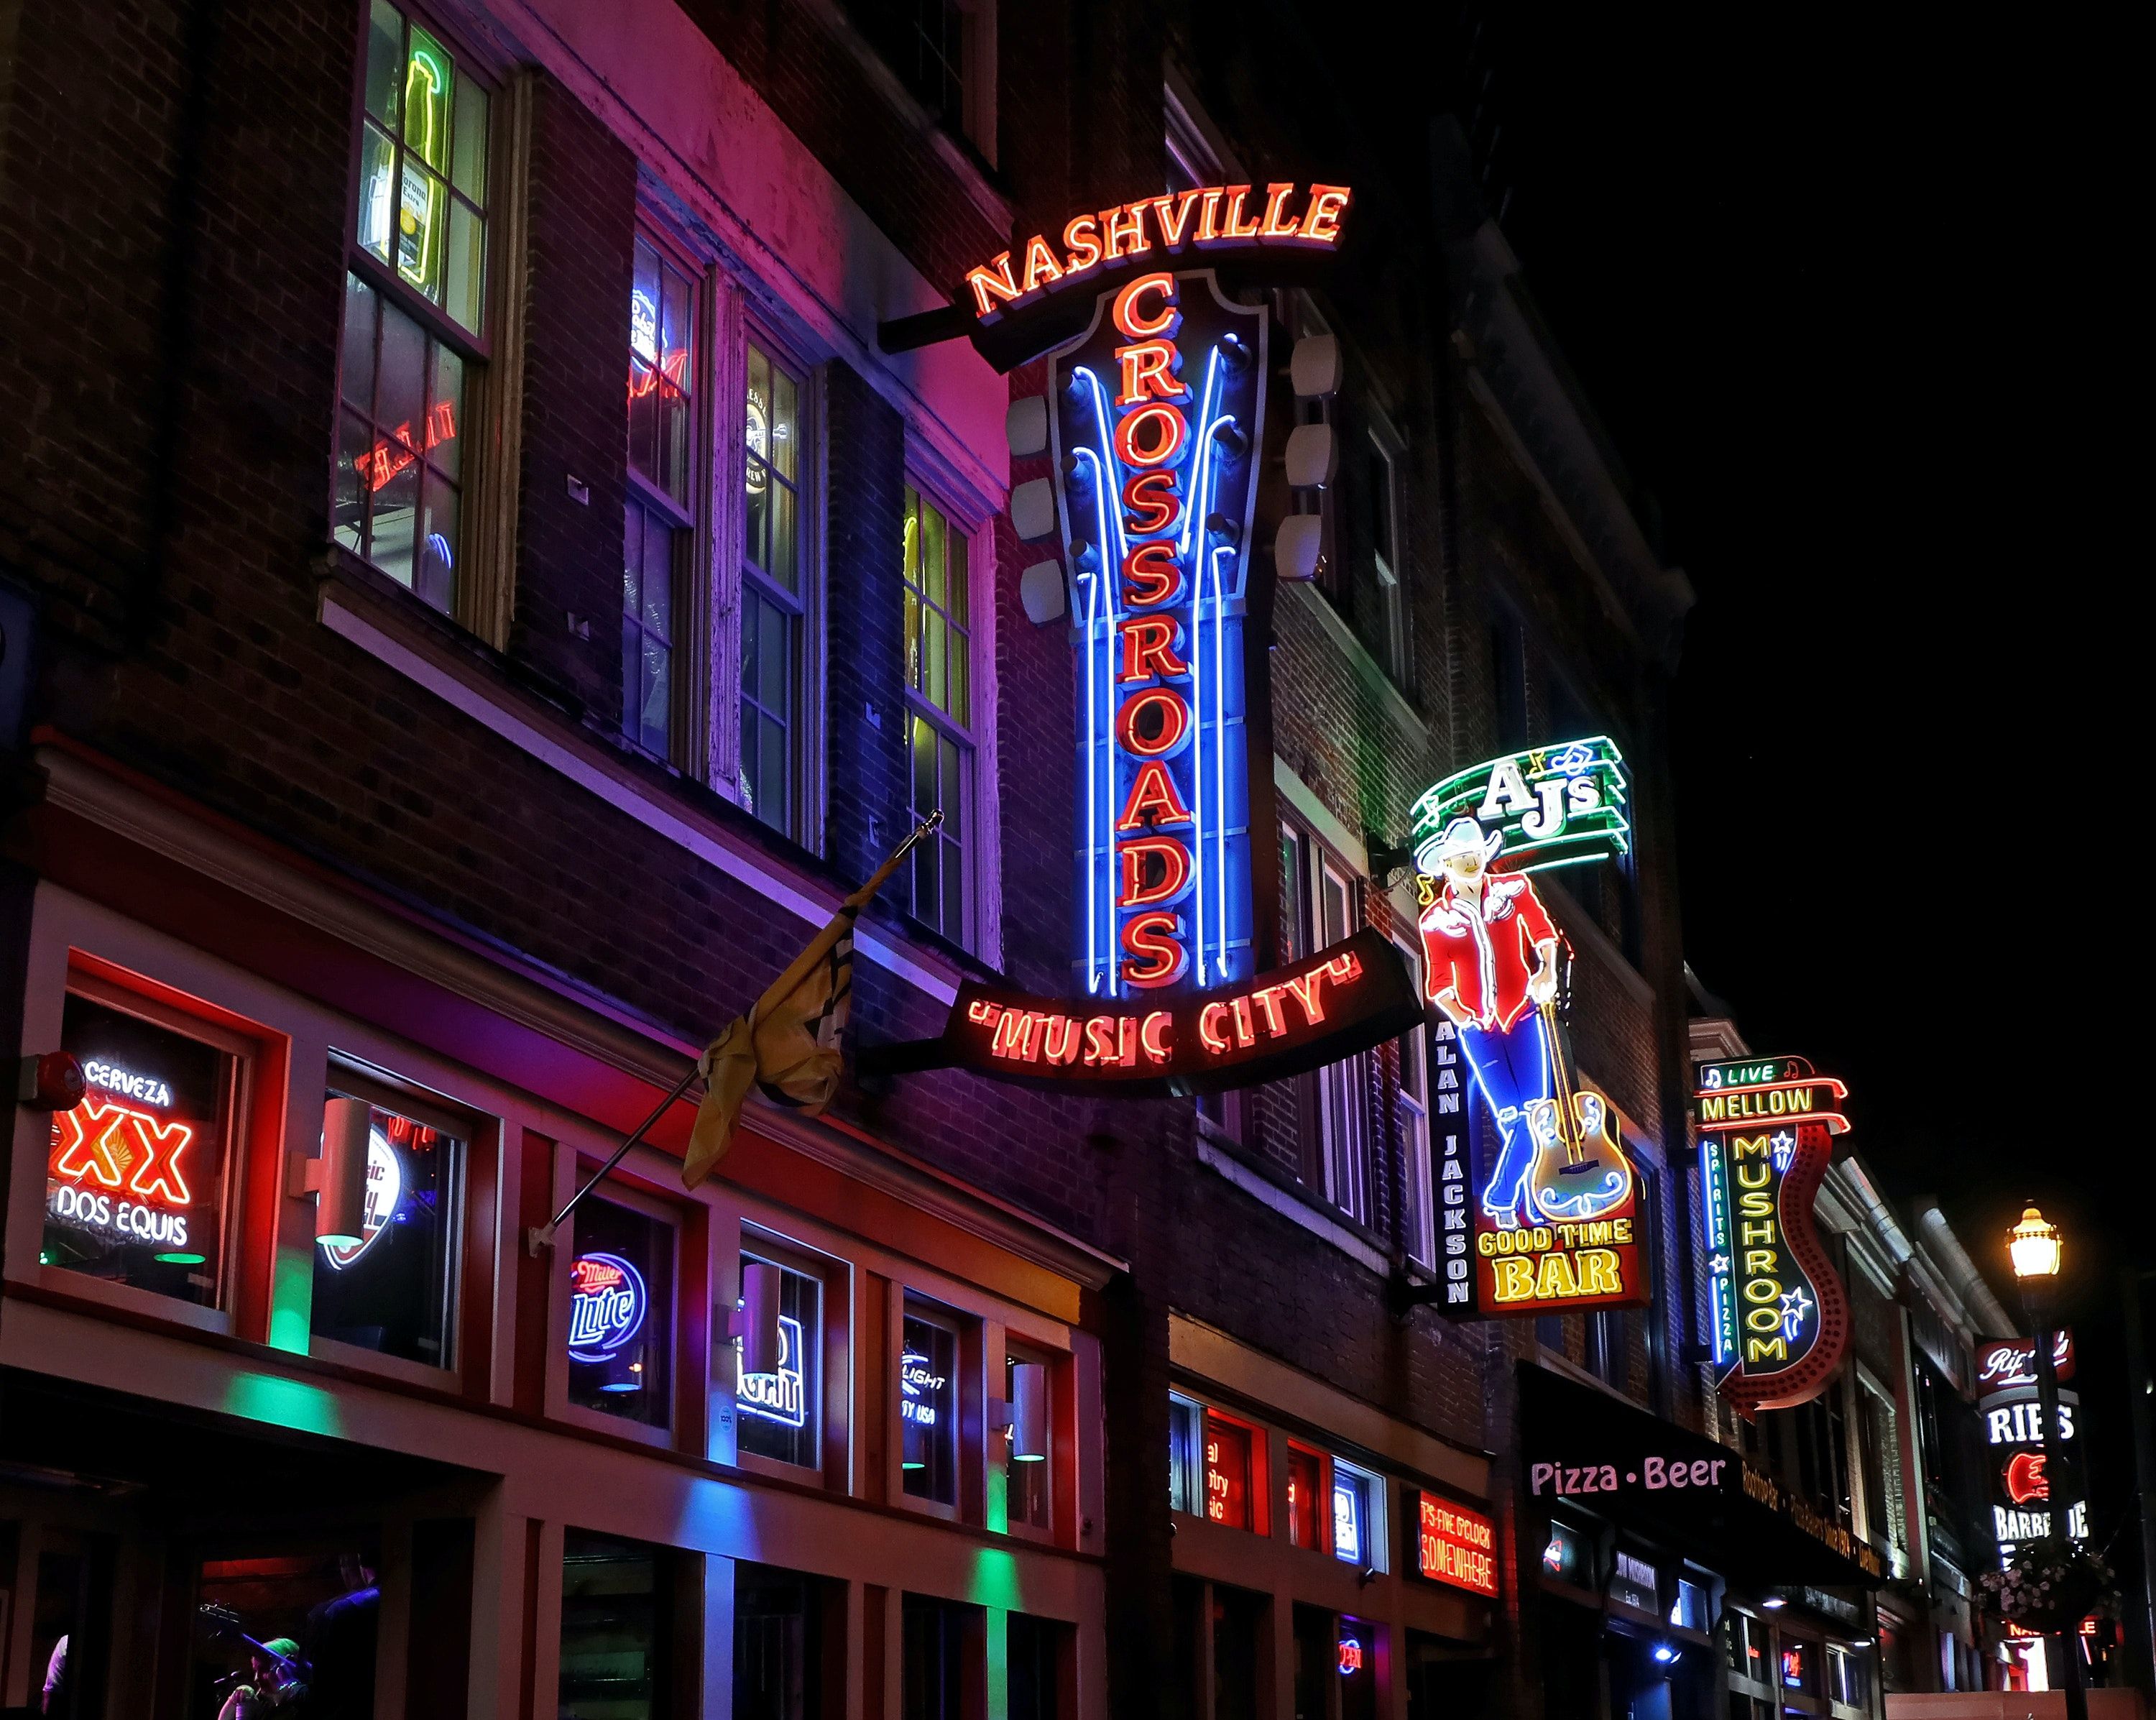 Nashville, Tennessee at night